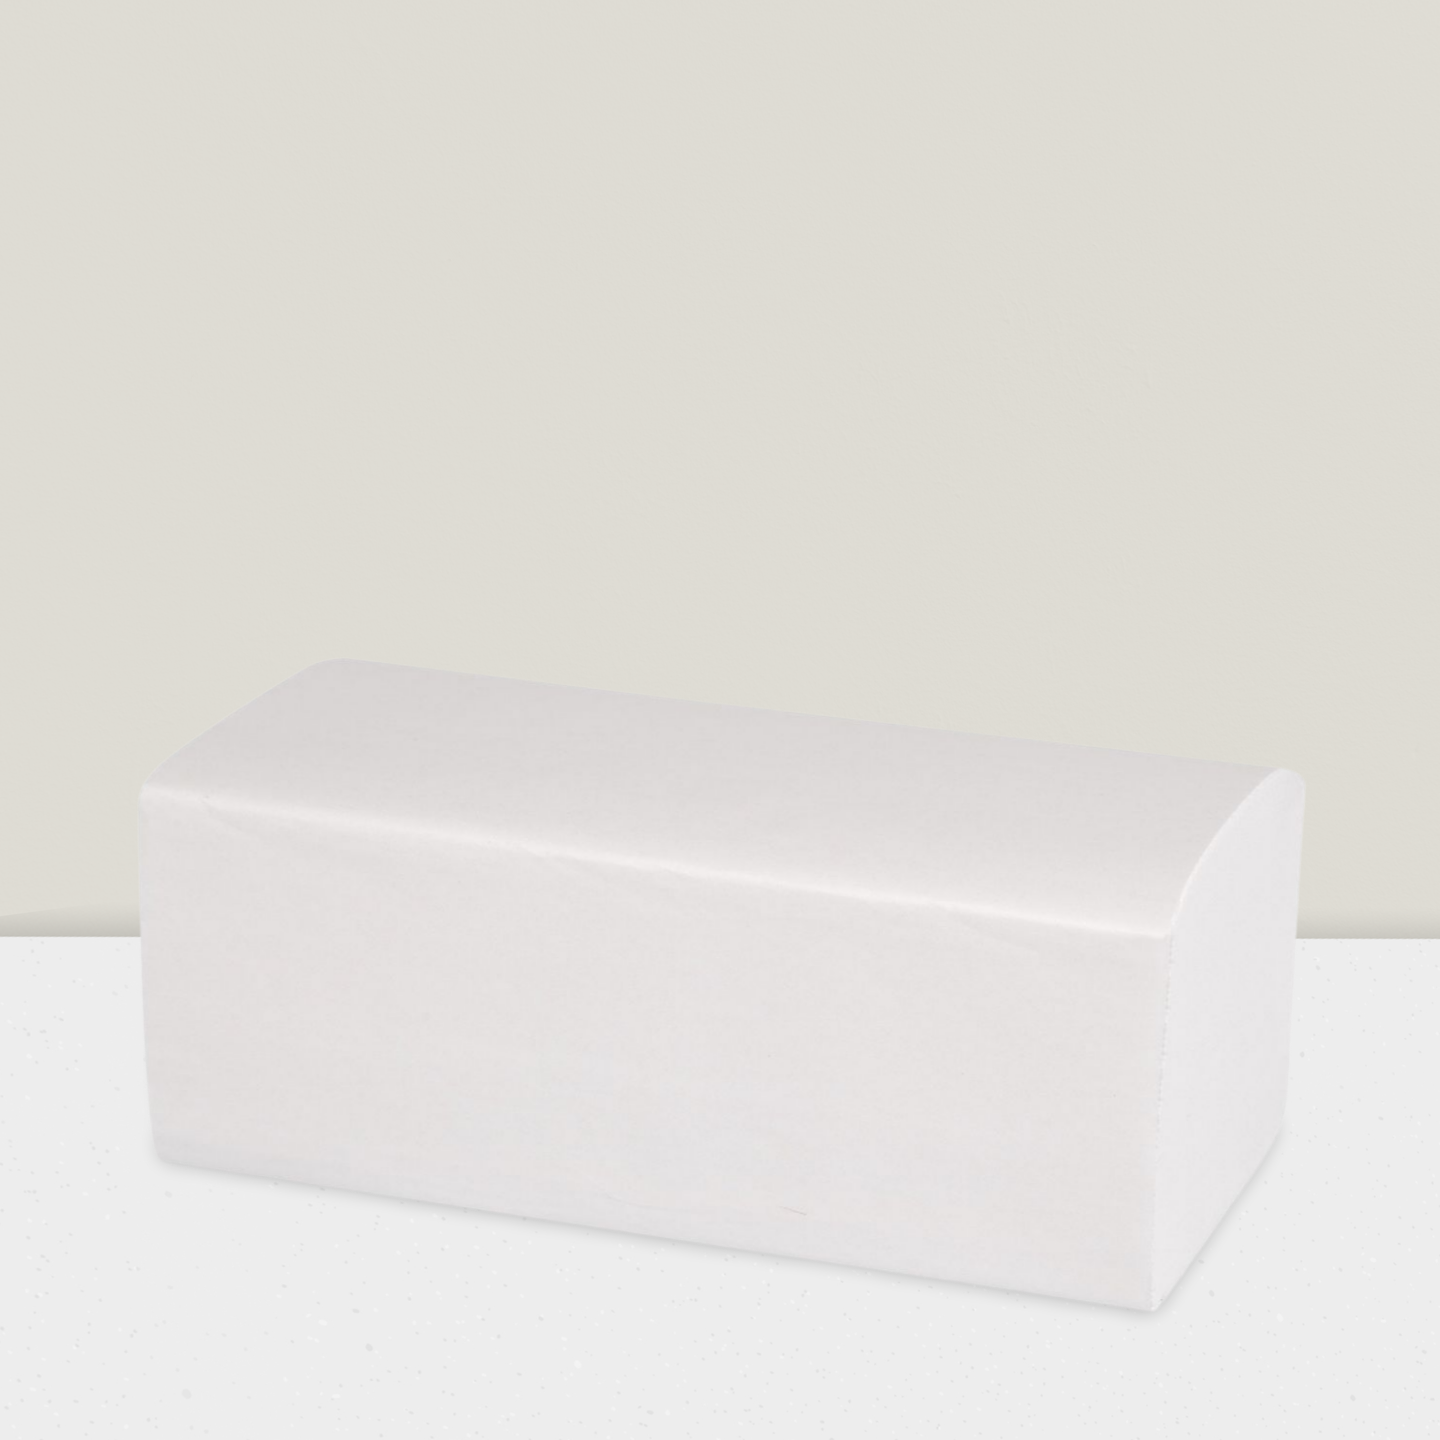 Papierfalthandtücher weiß Bündel mit 200 Stück